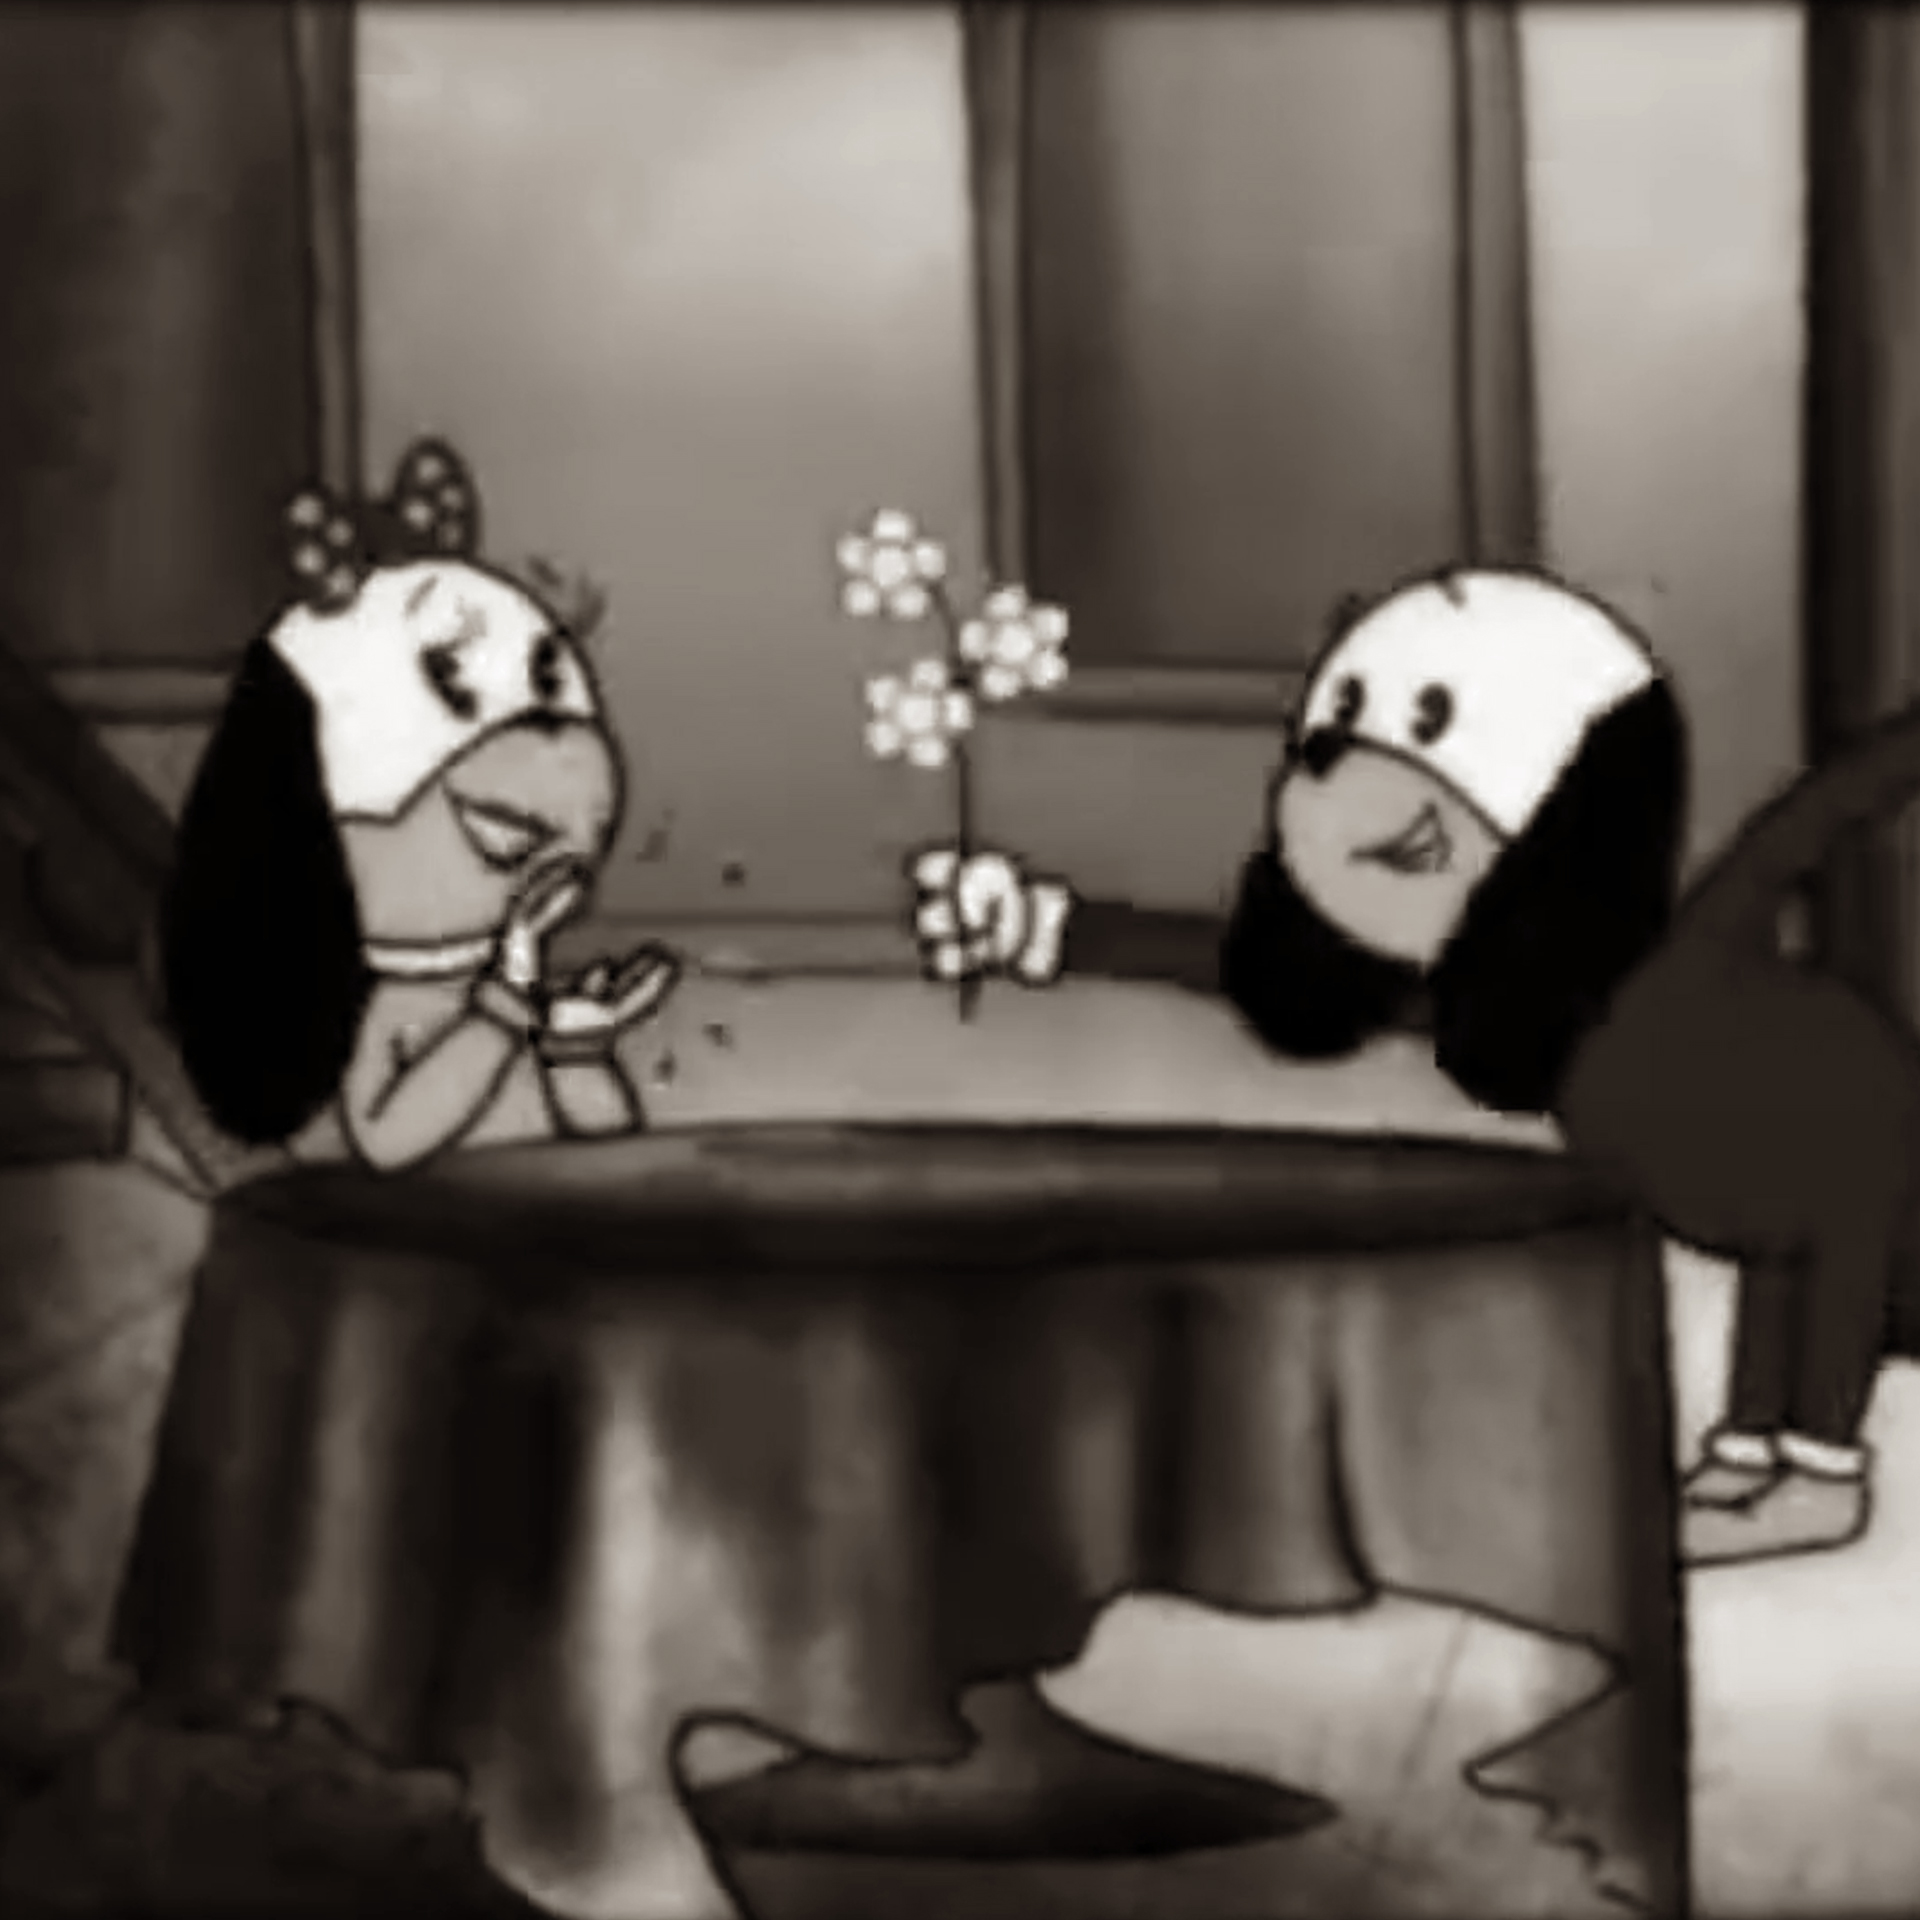 Cel animation of Beagle's story